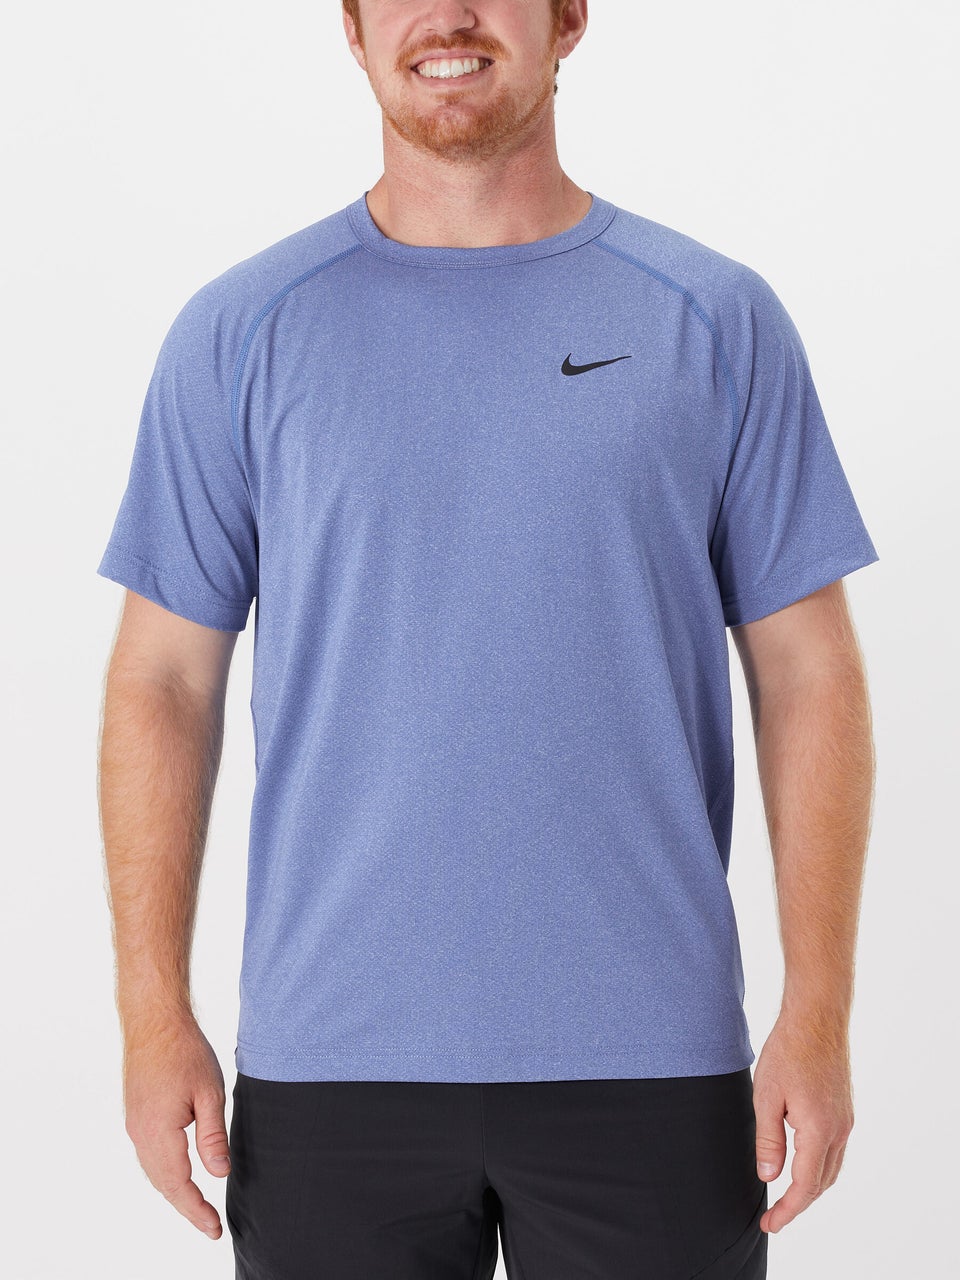 Nike Men's Fall Ready Crew | Tennis Warehouse